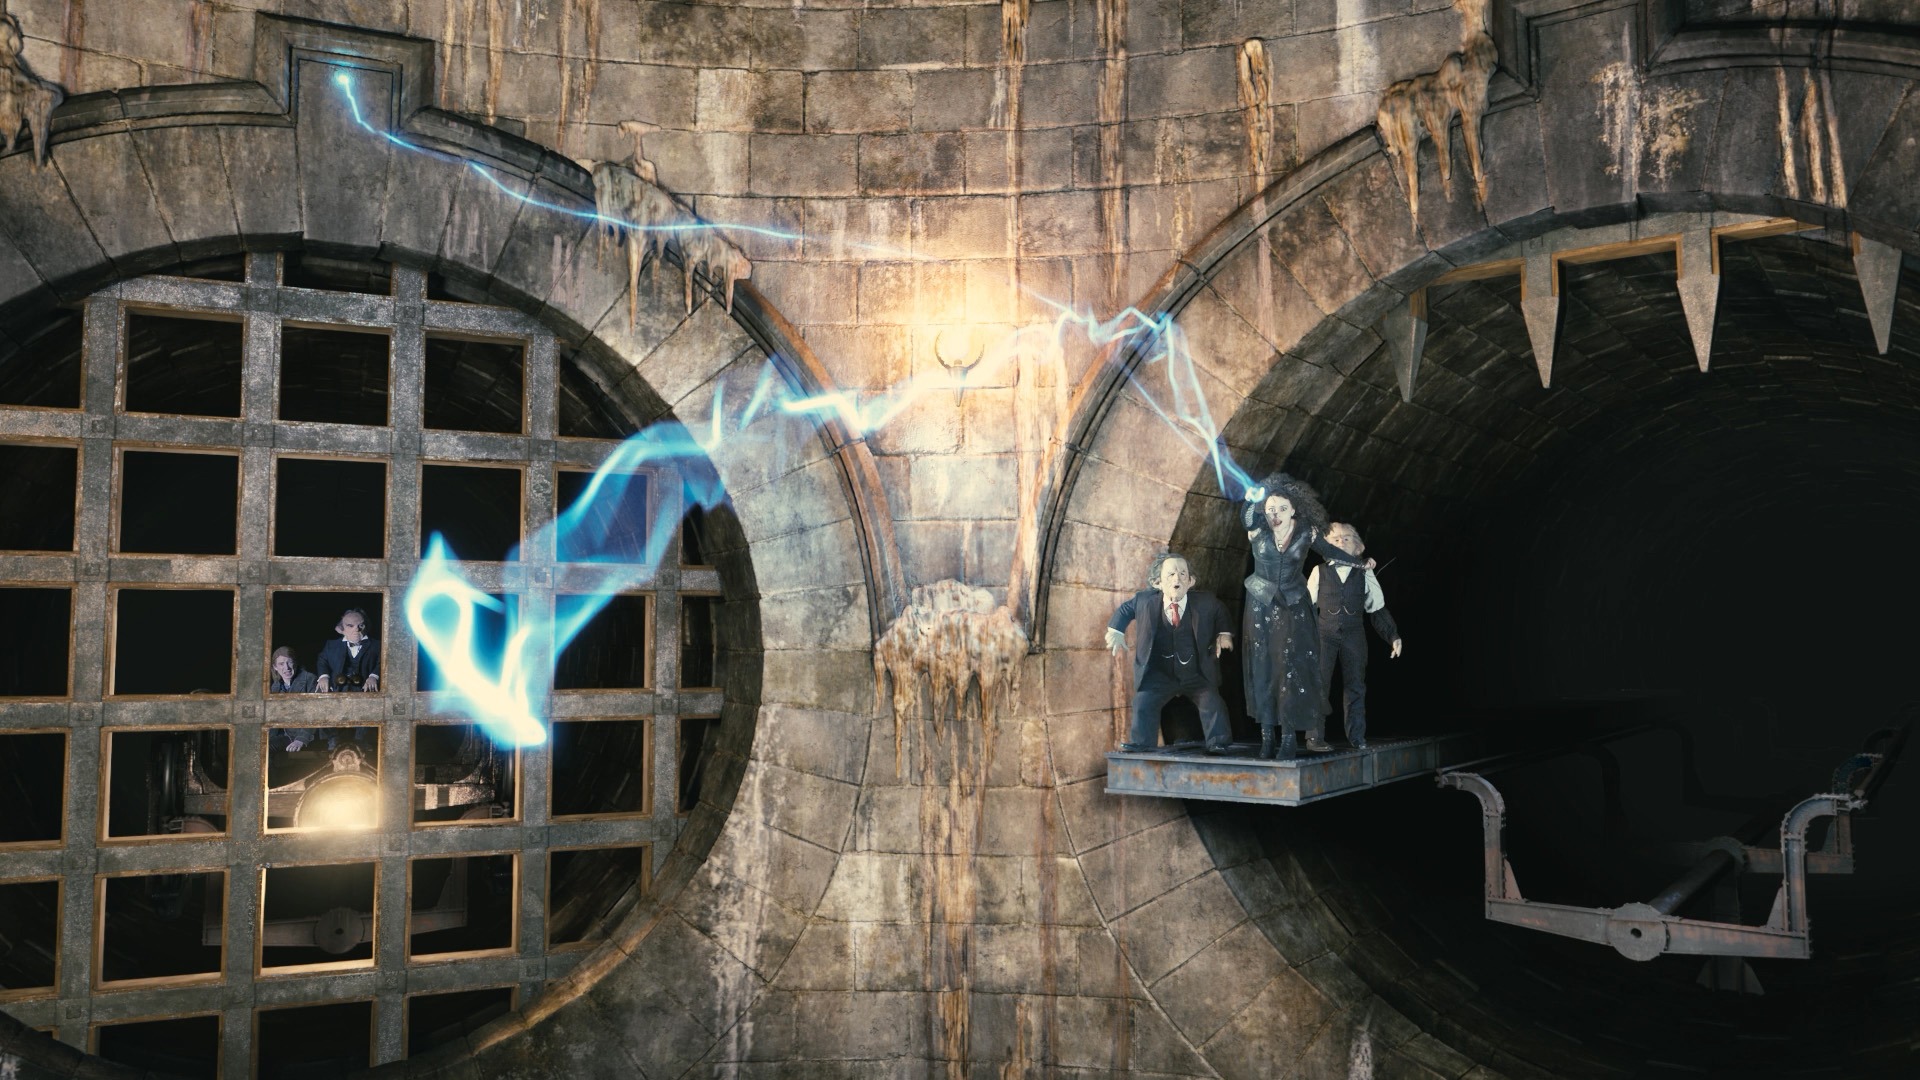 Image from Harry Potter and the Escape from Gringotts -  Villainous Death Eater Bellatrix Lestrange